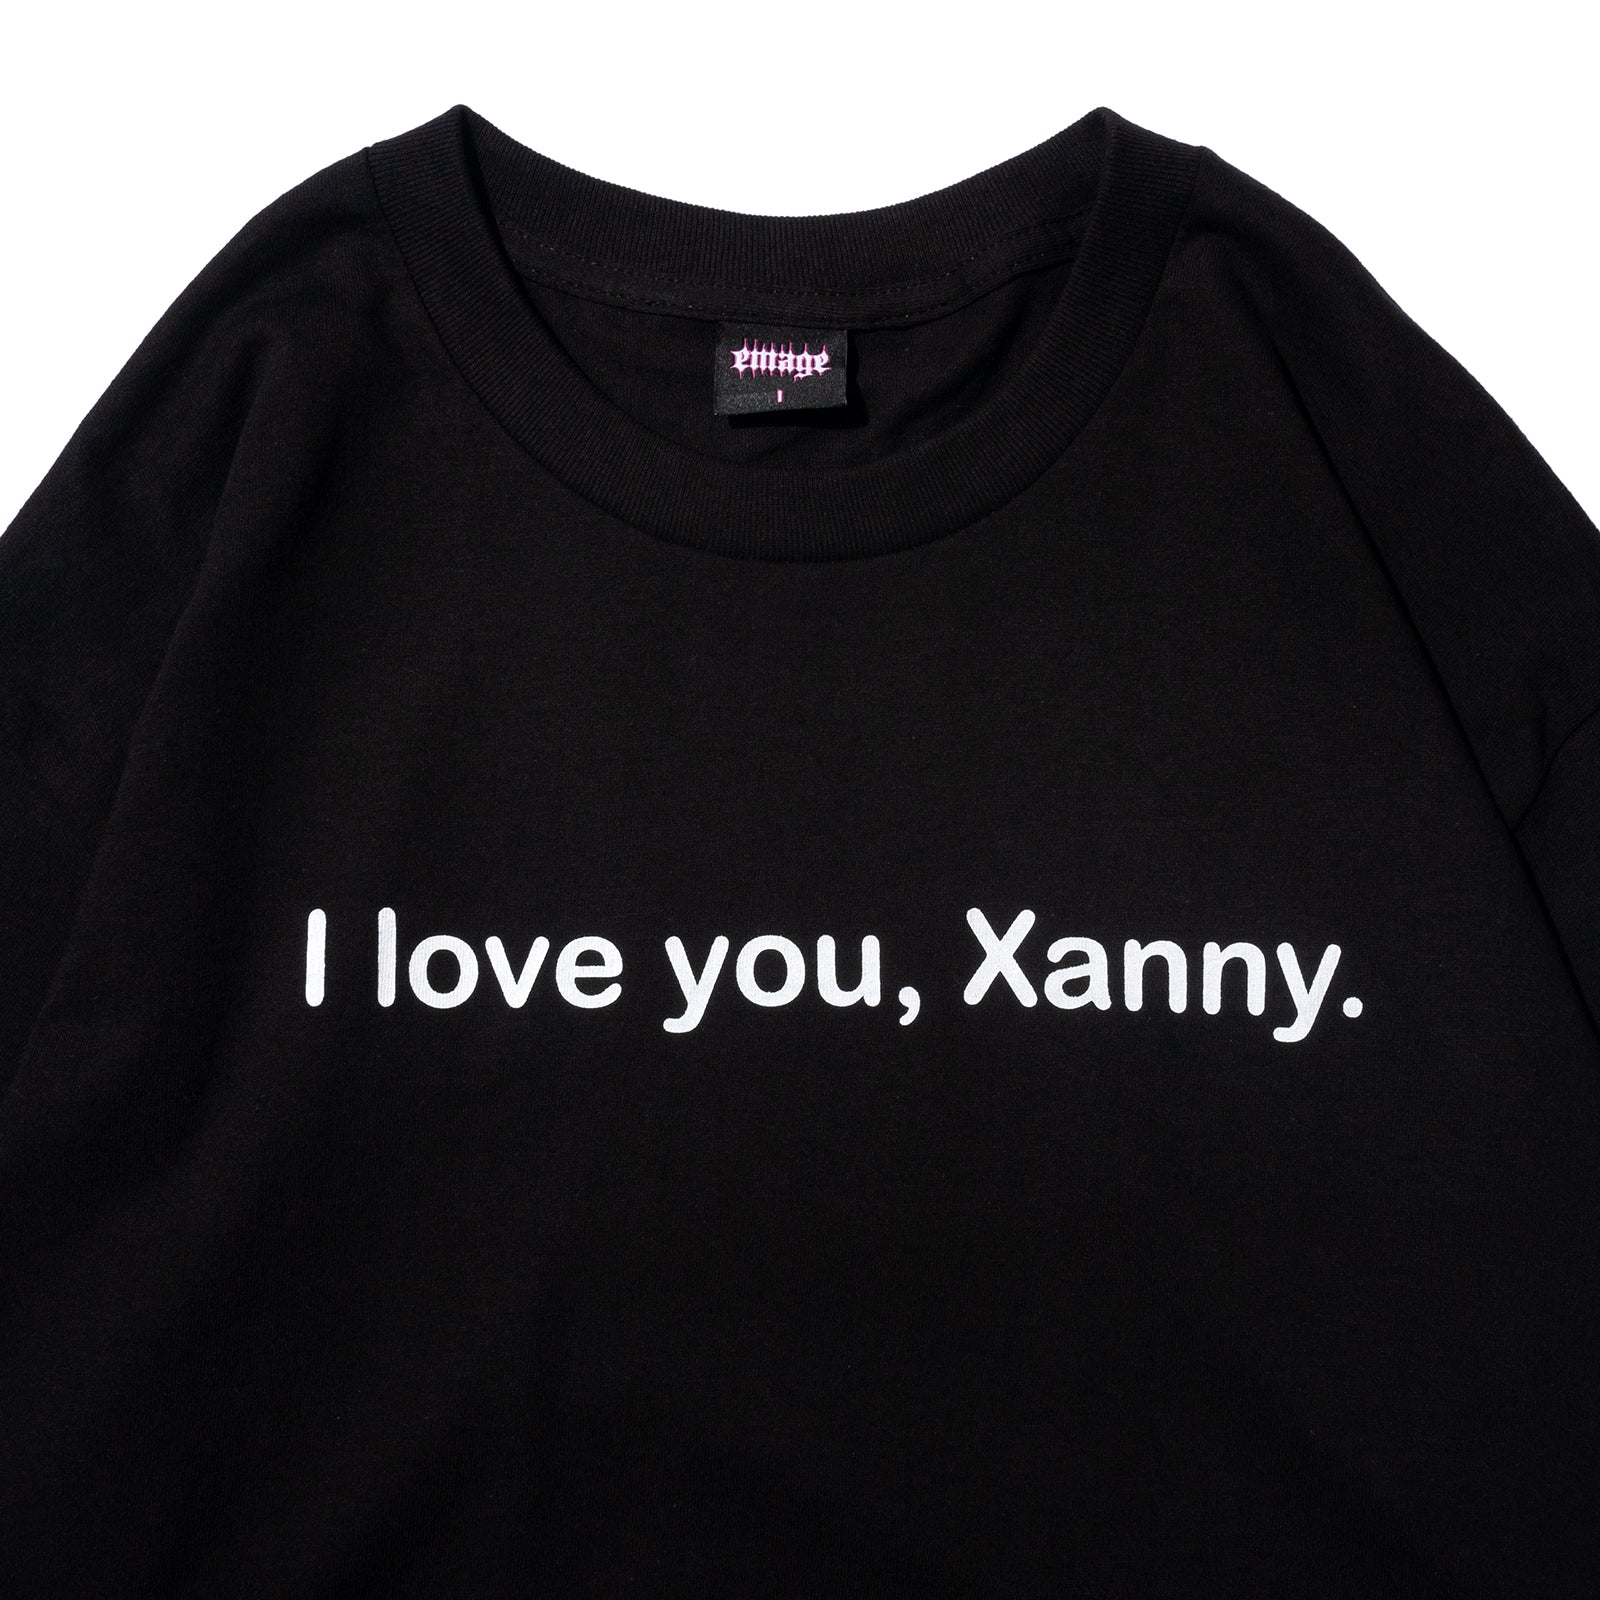 I LOVE YOU, XANNY. TEE (Black)